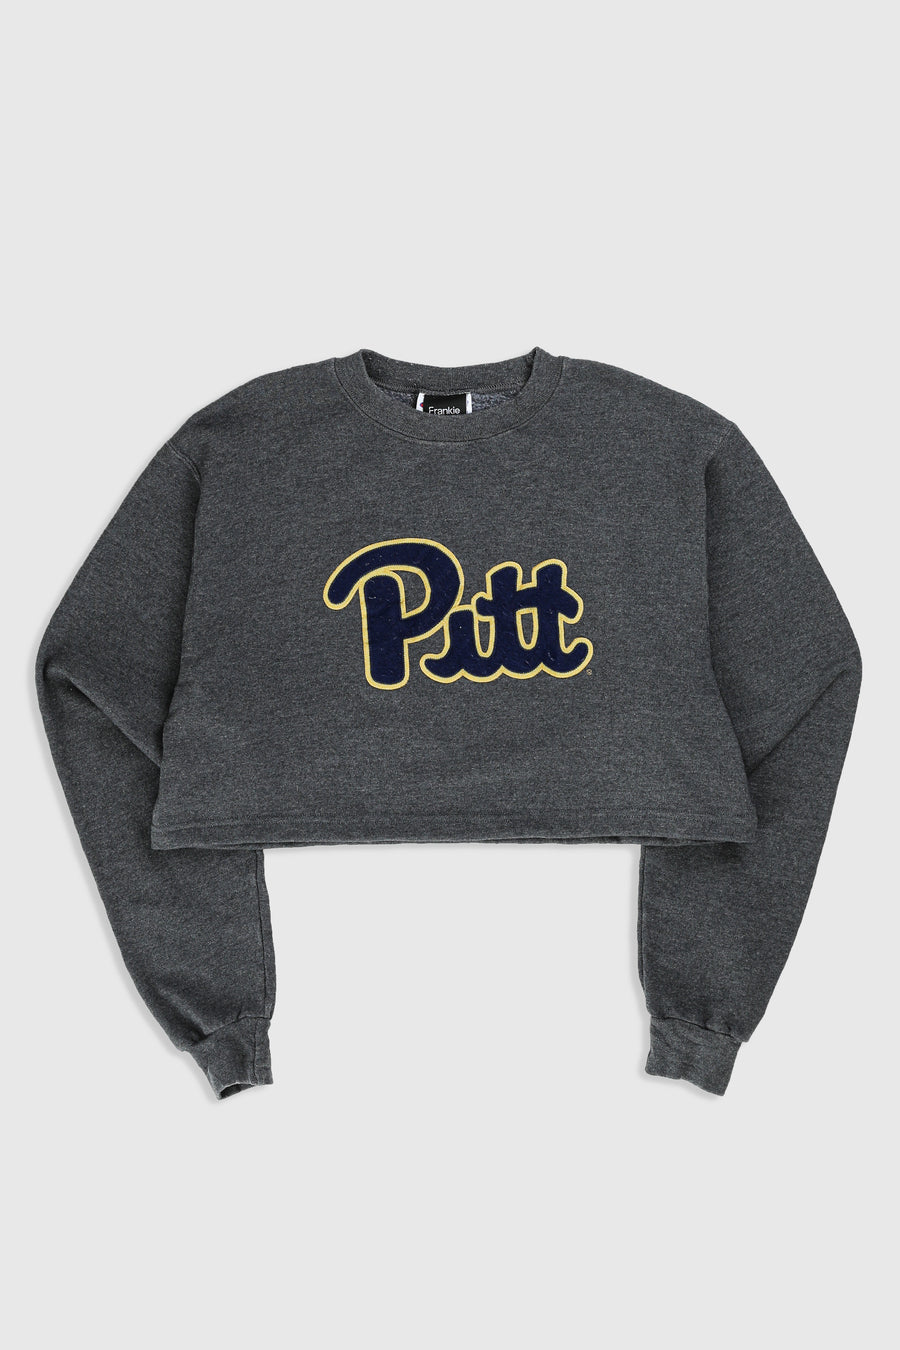 Rework Pittsburgh Crop Sweatshirt - L